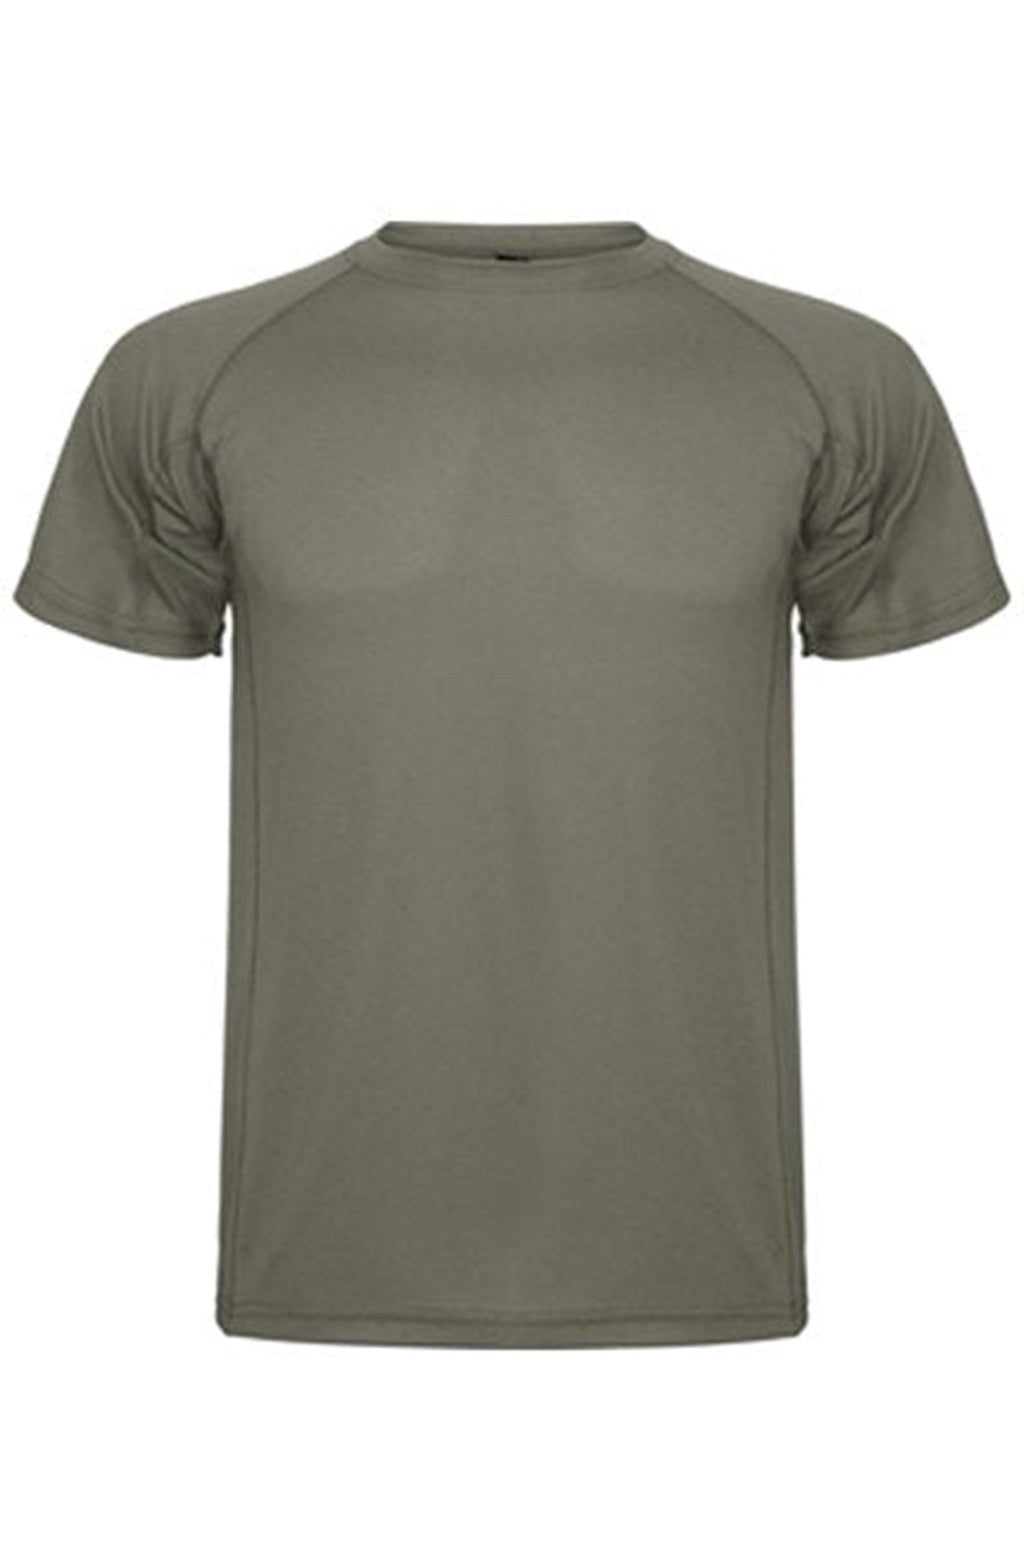 Training T -shirt - Army Green